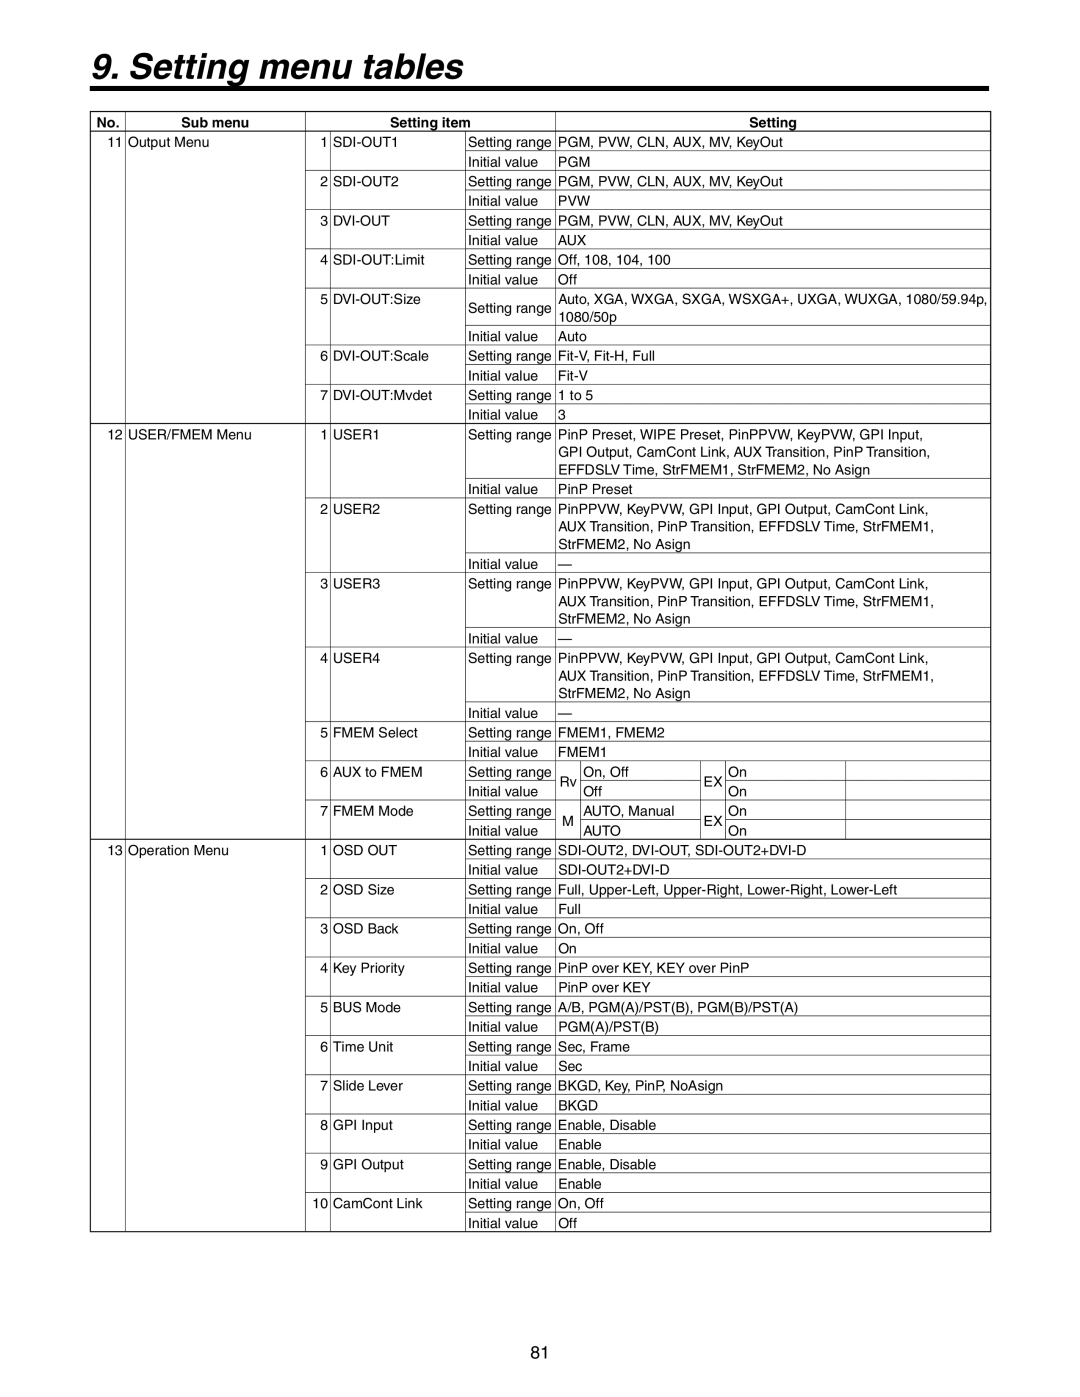 Panasonic AW-HS50N operating instructions Setting menu tables, Output Menu 12 USER/FMEM Menu, Setting item 